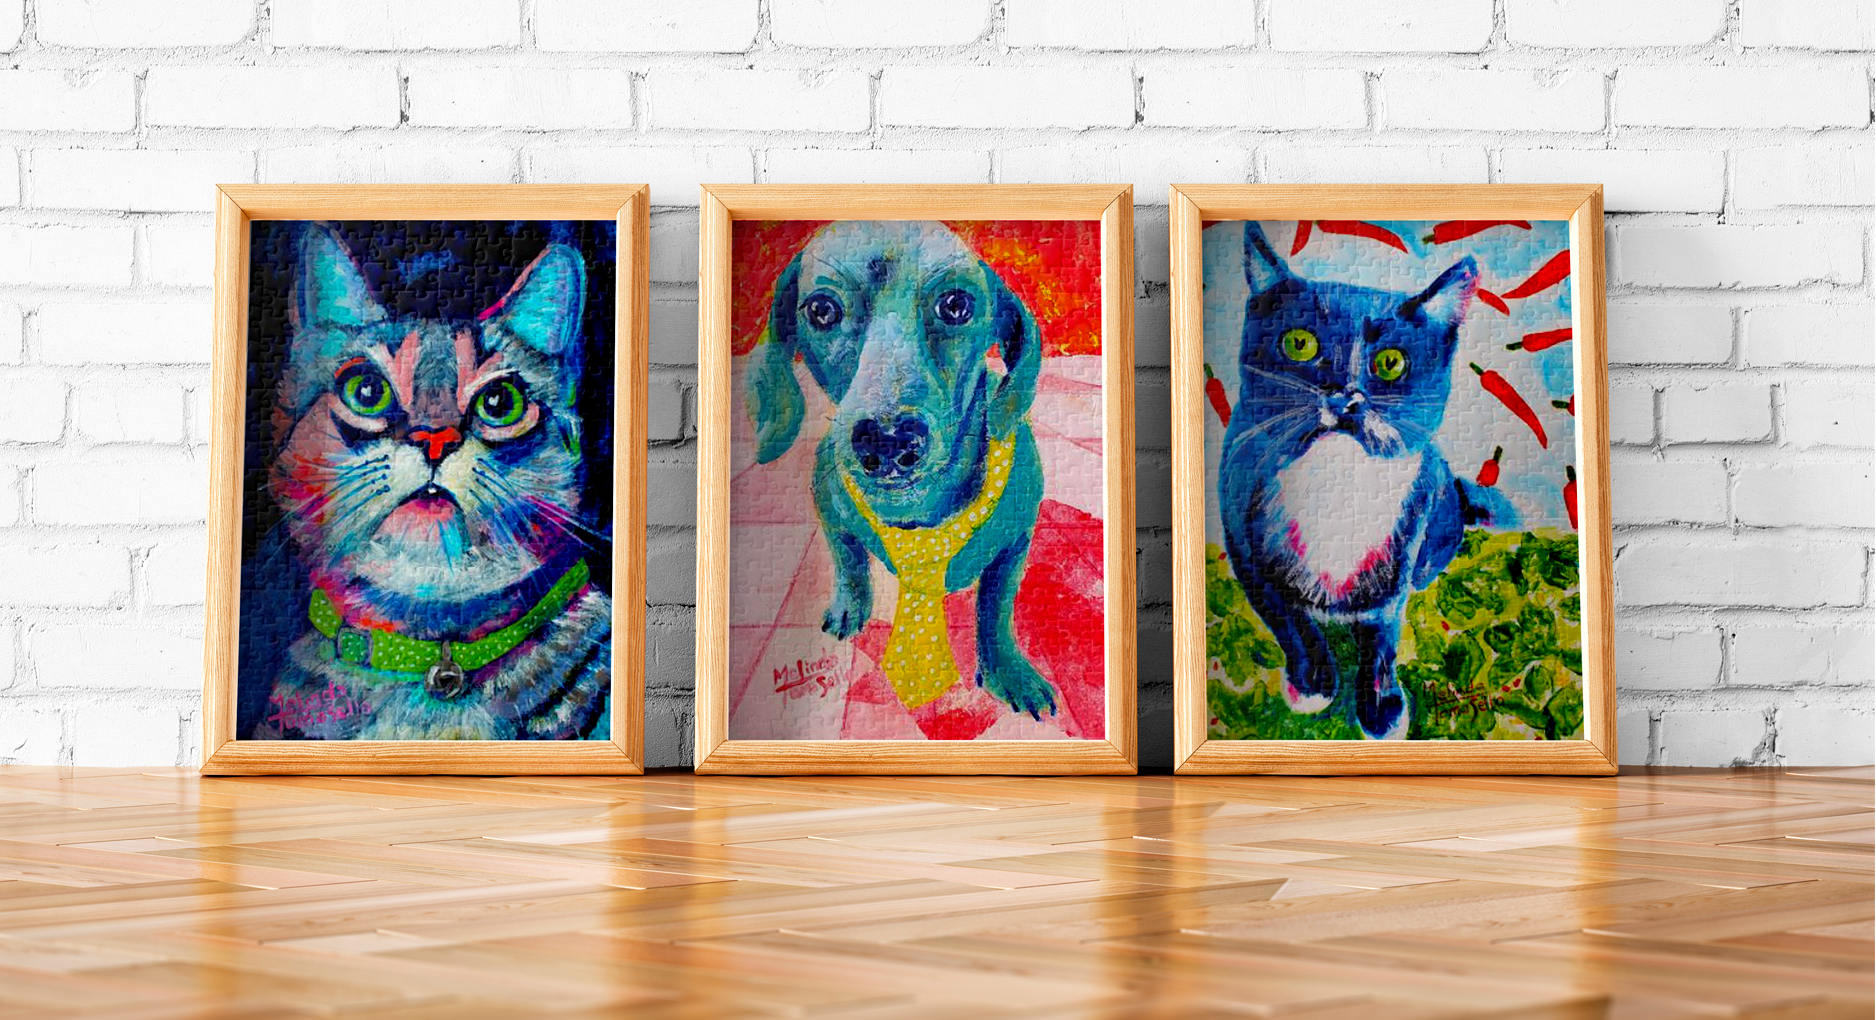 Melinda Tomasello art whimsical vibrant pet painting gallery ensemble